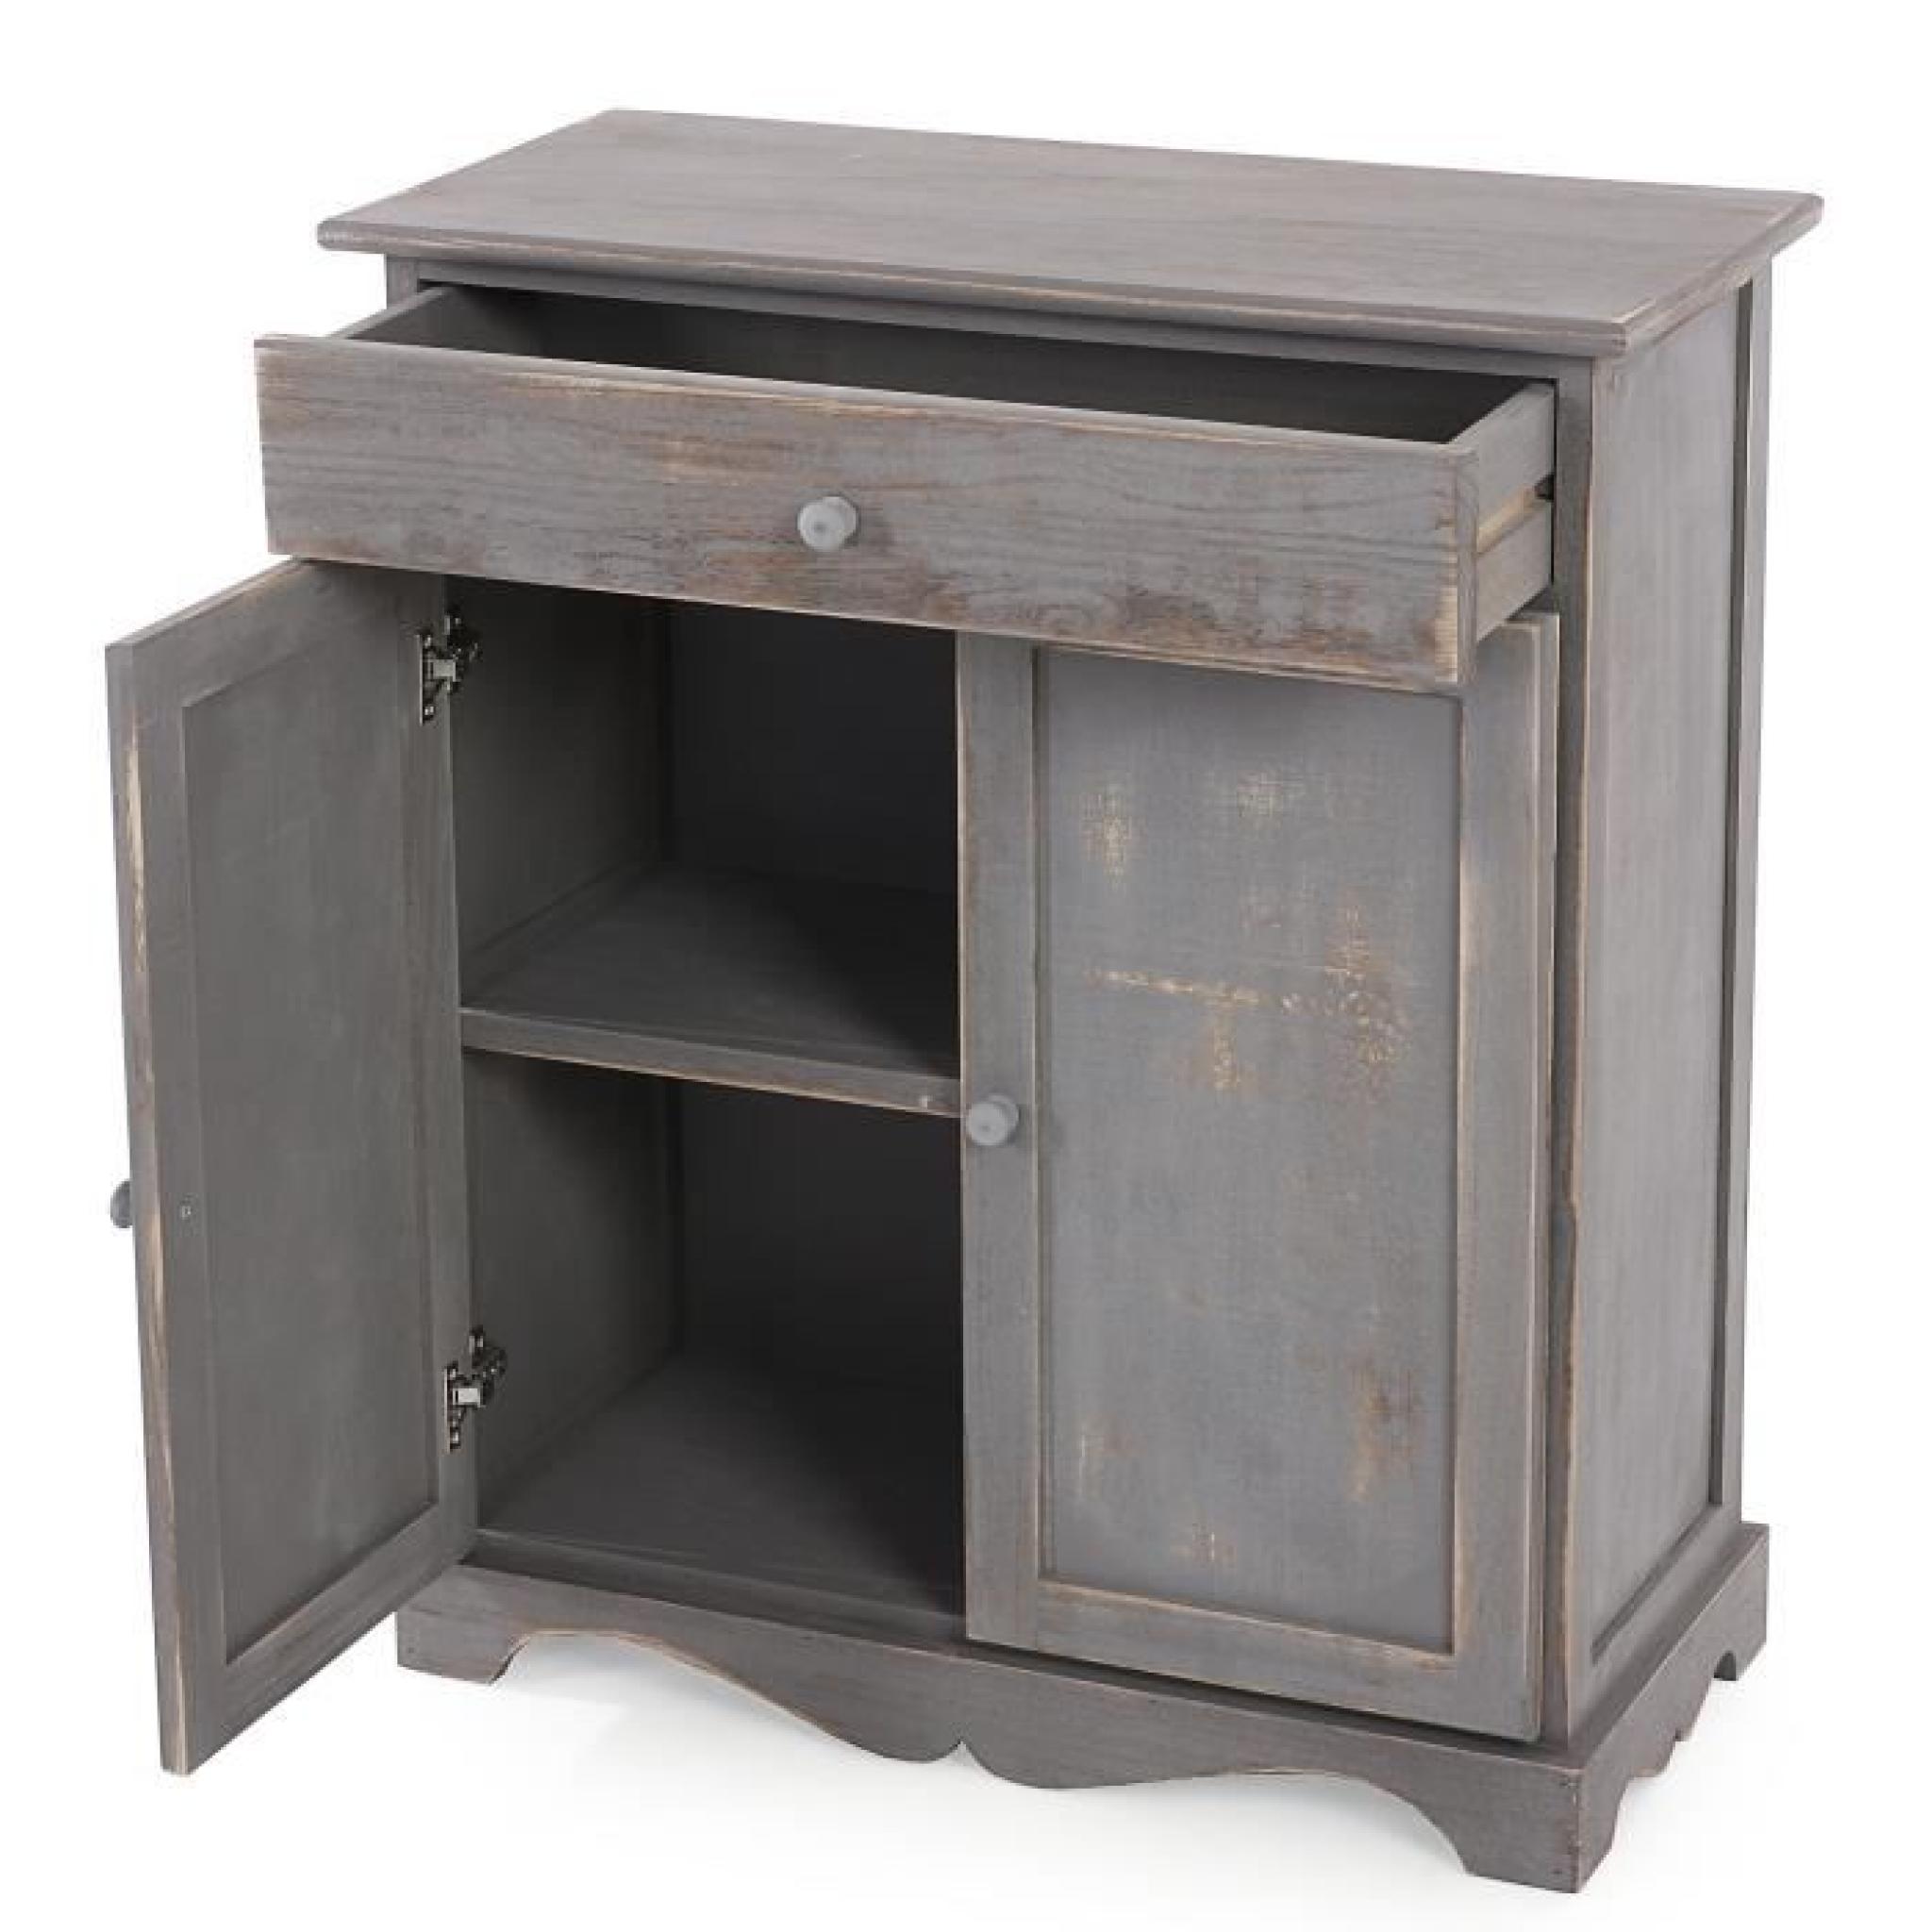 Commode / table d'appoint / armoire,66x33x78cm, shabby, vintage, gris. pas cher